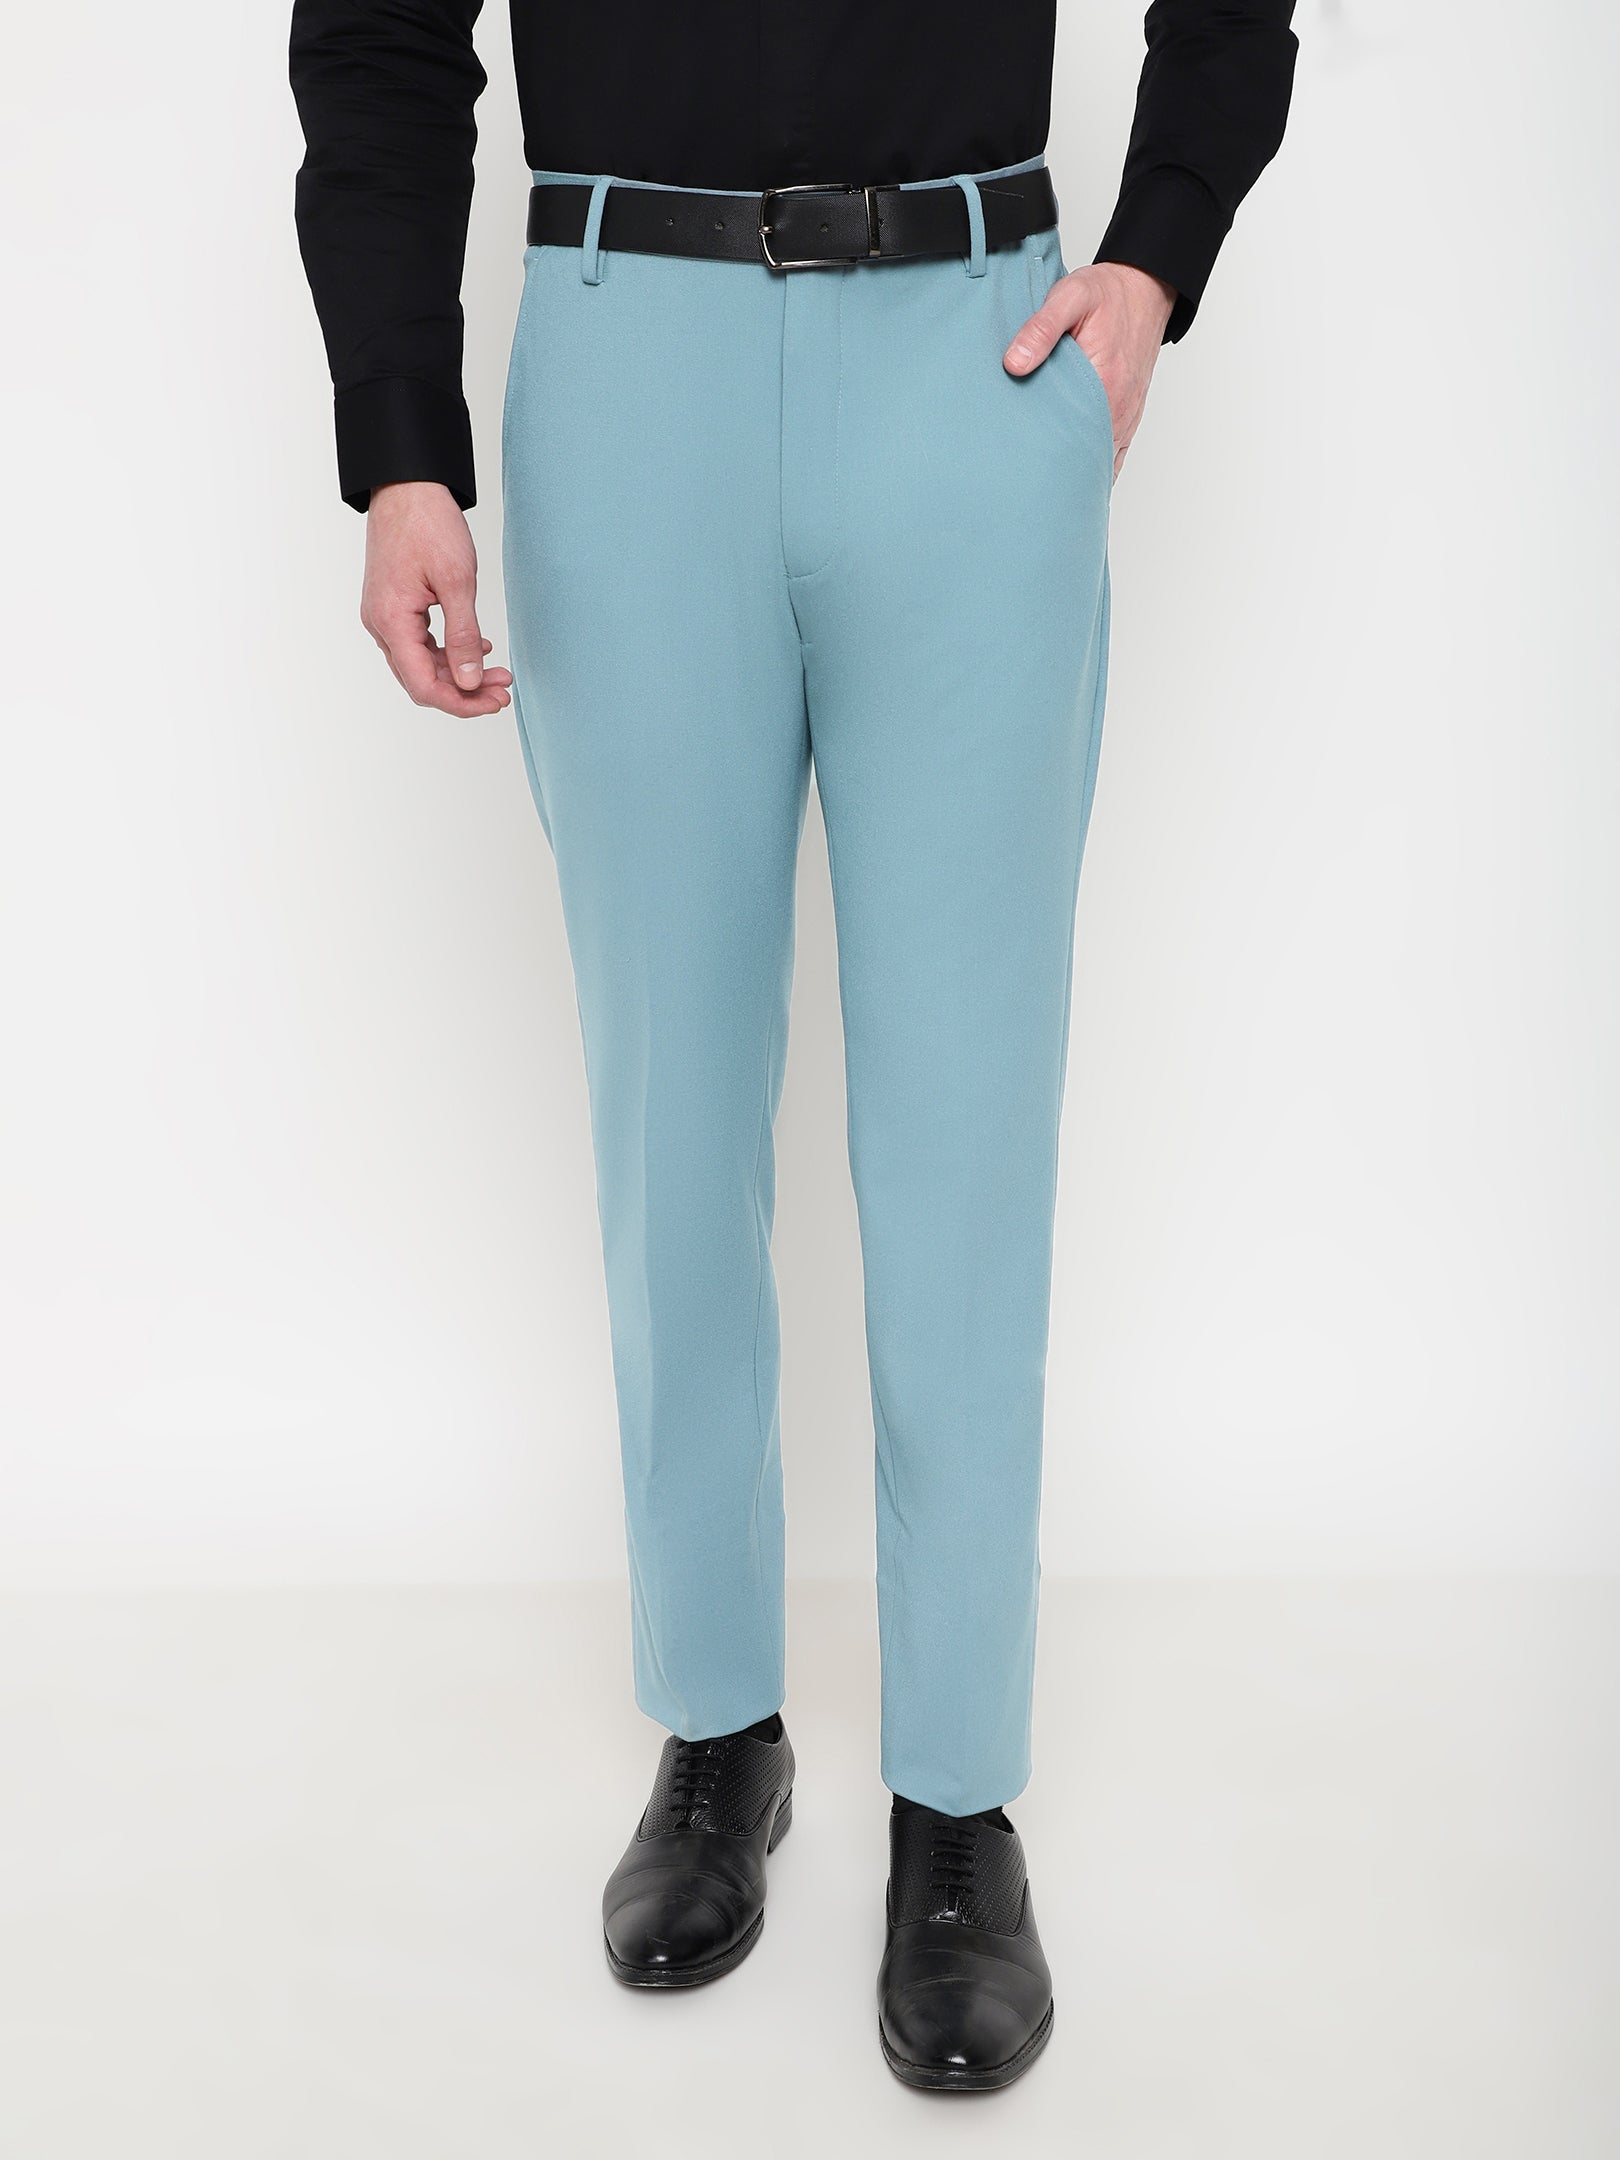 Men Jeans Classic Business Casual Advanced Stretch Regular Fit Denim Trousers  Grey Blue Pants Male (Color : Regular 063-Black, Size : 28) at Amazon Men's  Clothing store